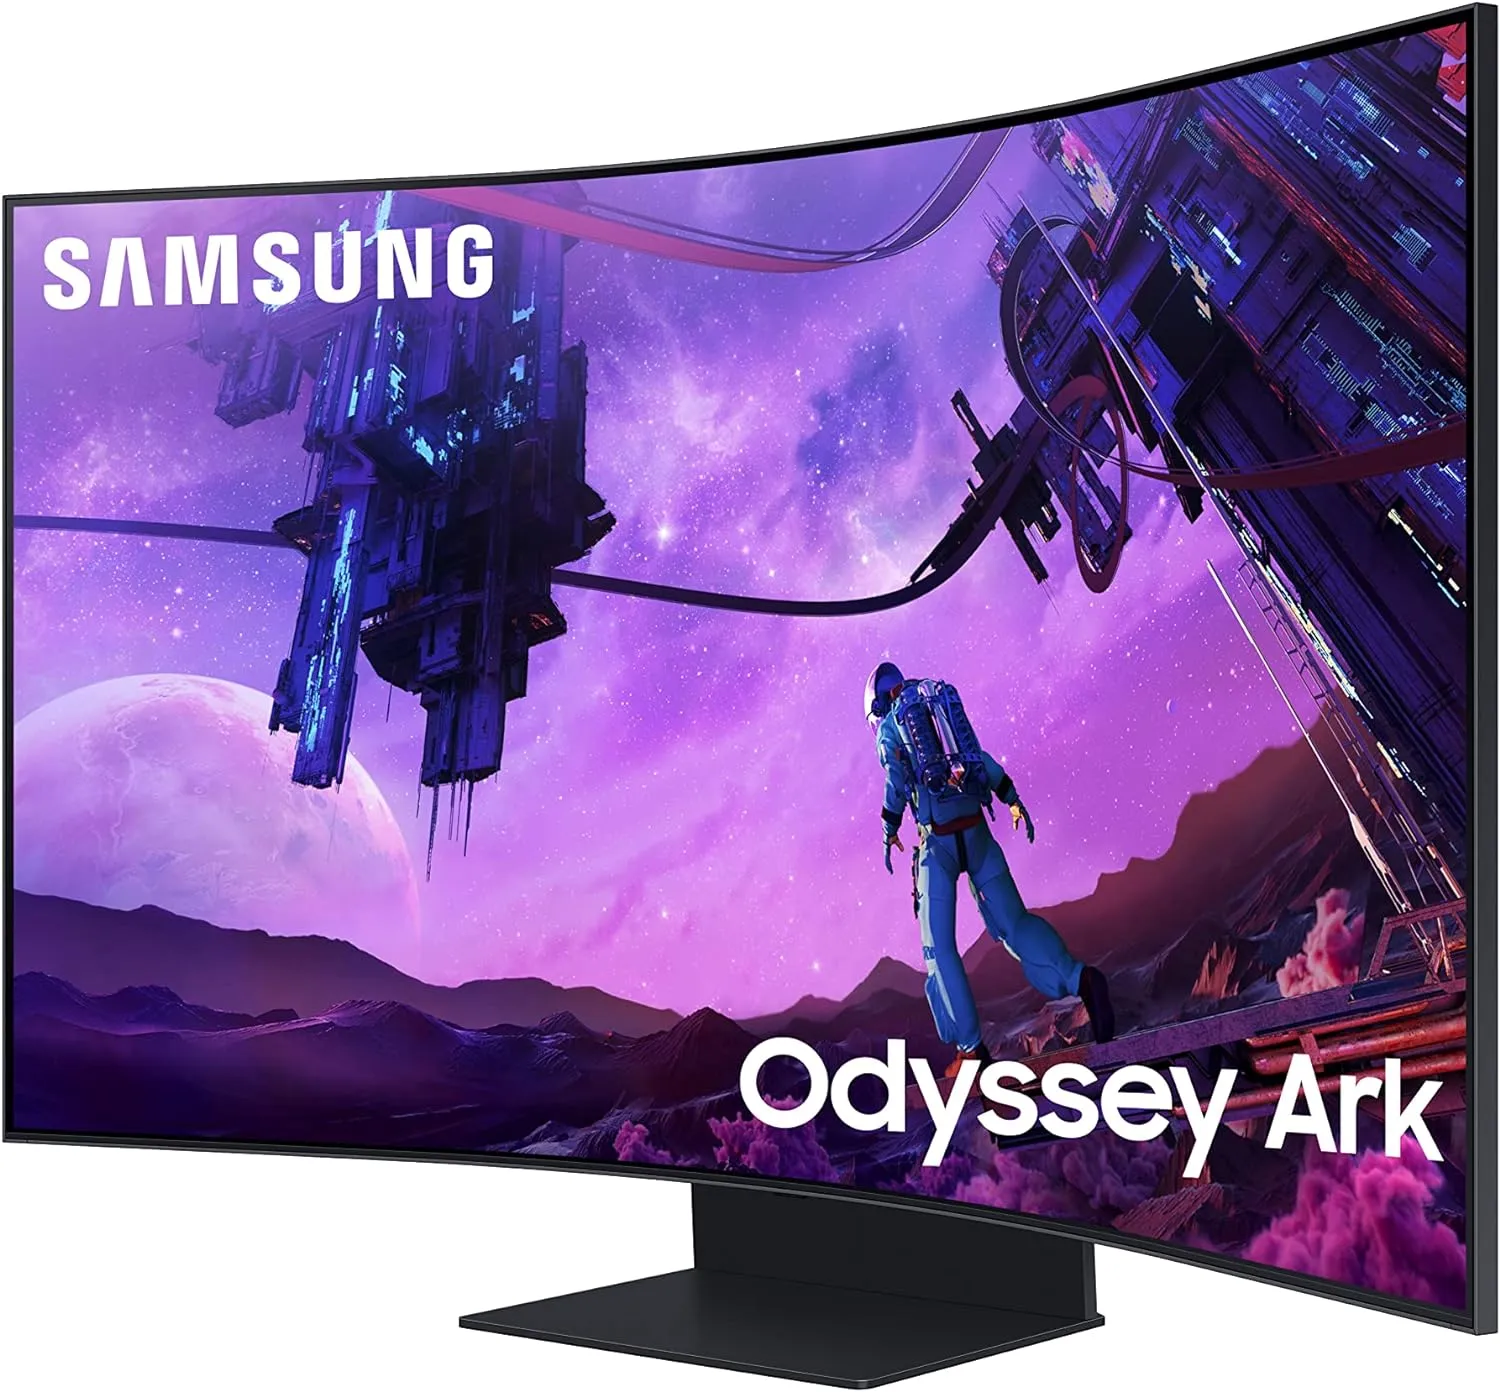 Samsung 55 inch Odyssey Ark Series 4K UHD Curved Monitor